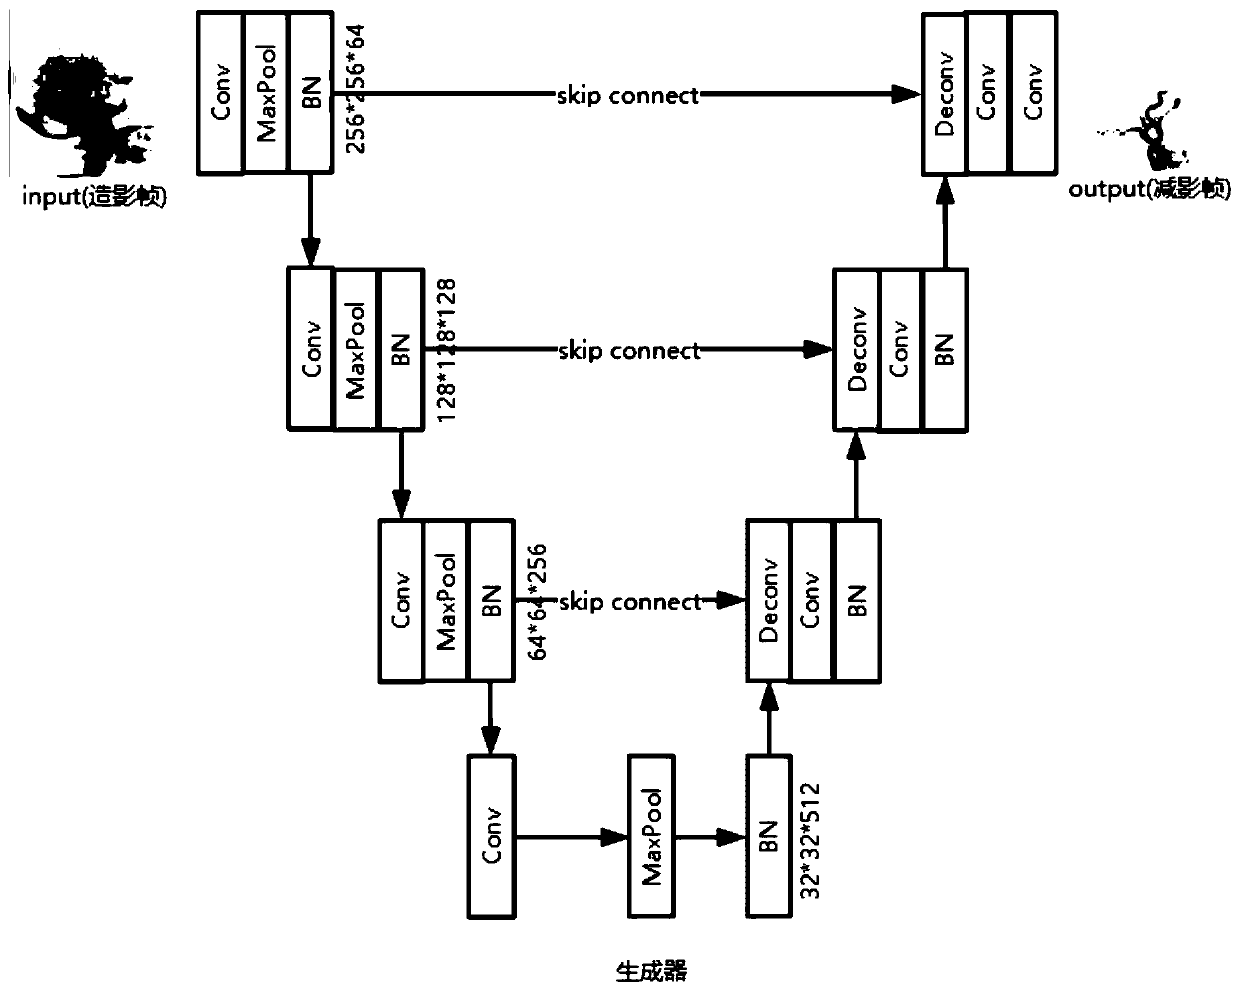 U-net based generation adversarial network DSA imaging method and device